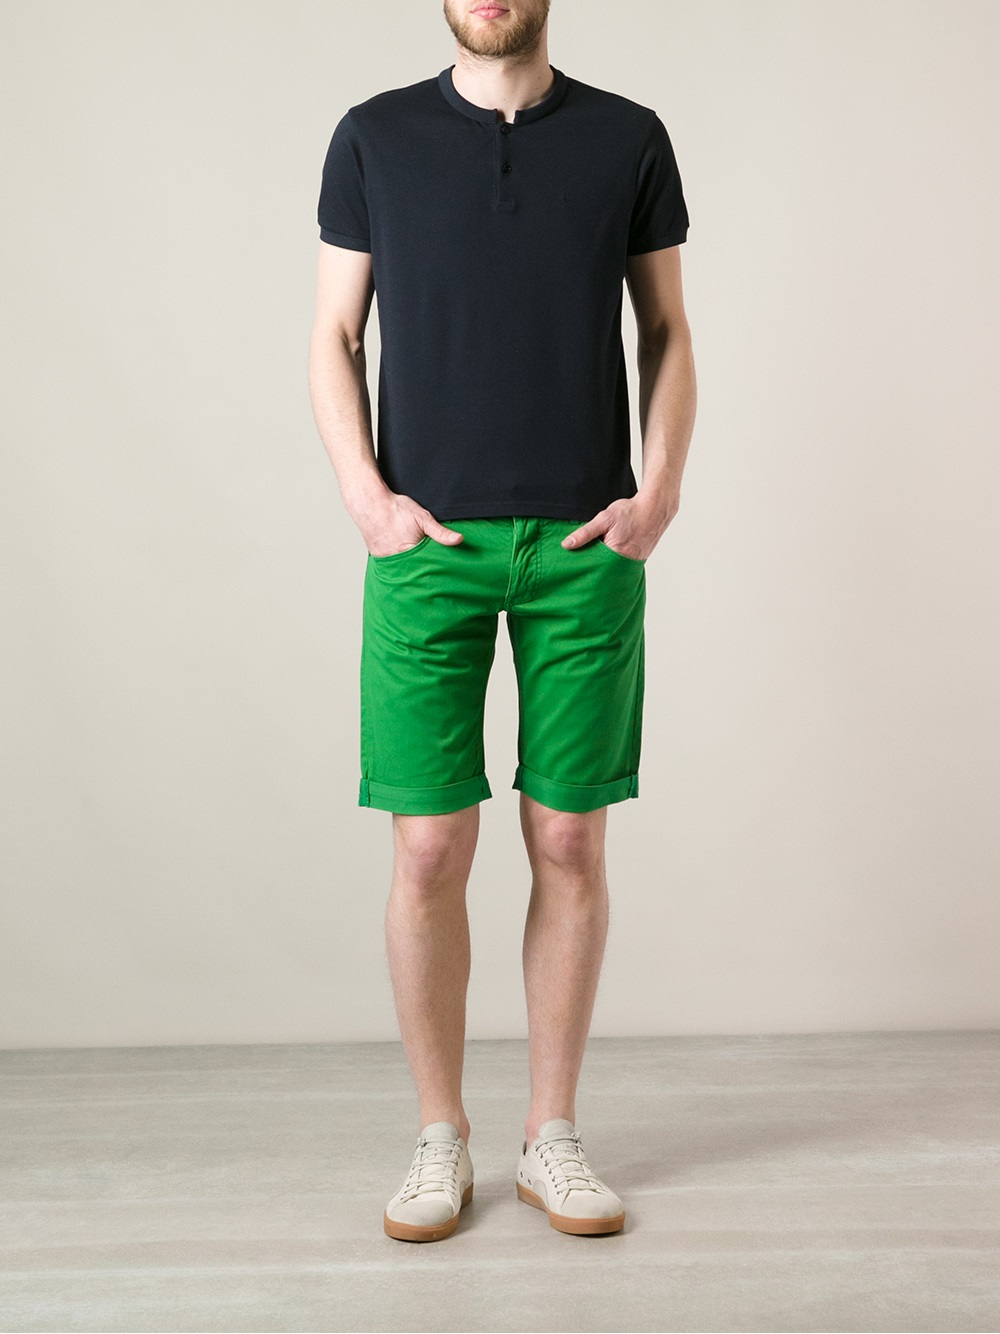 Armani Jeans Denim Shorts in Green for Men - Lyst